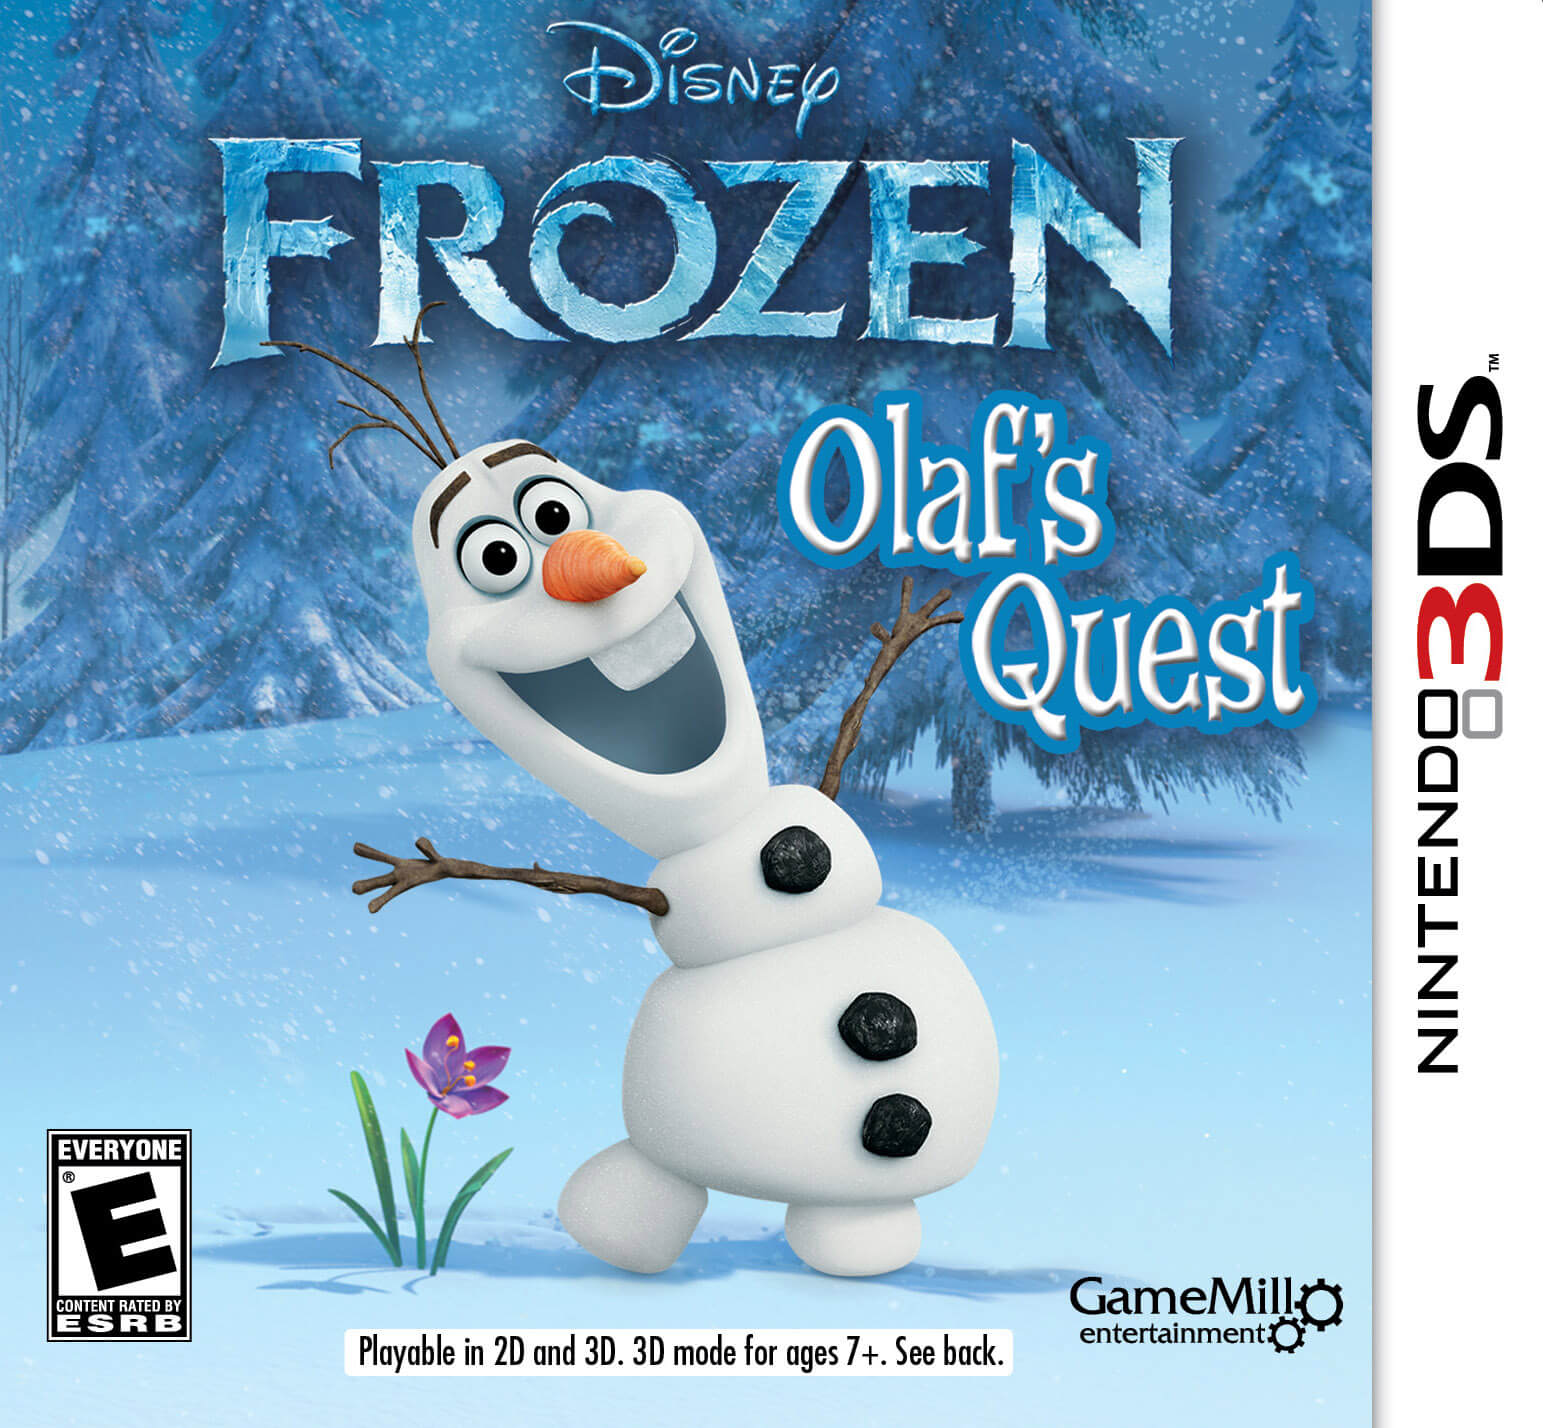 Disney Frozen: Olaf’s Quest